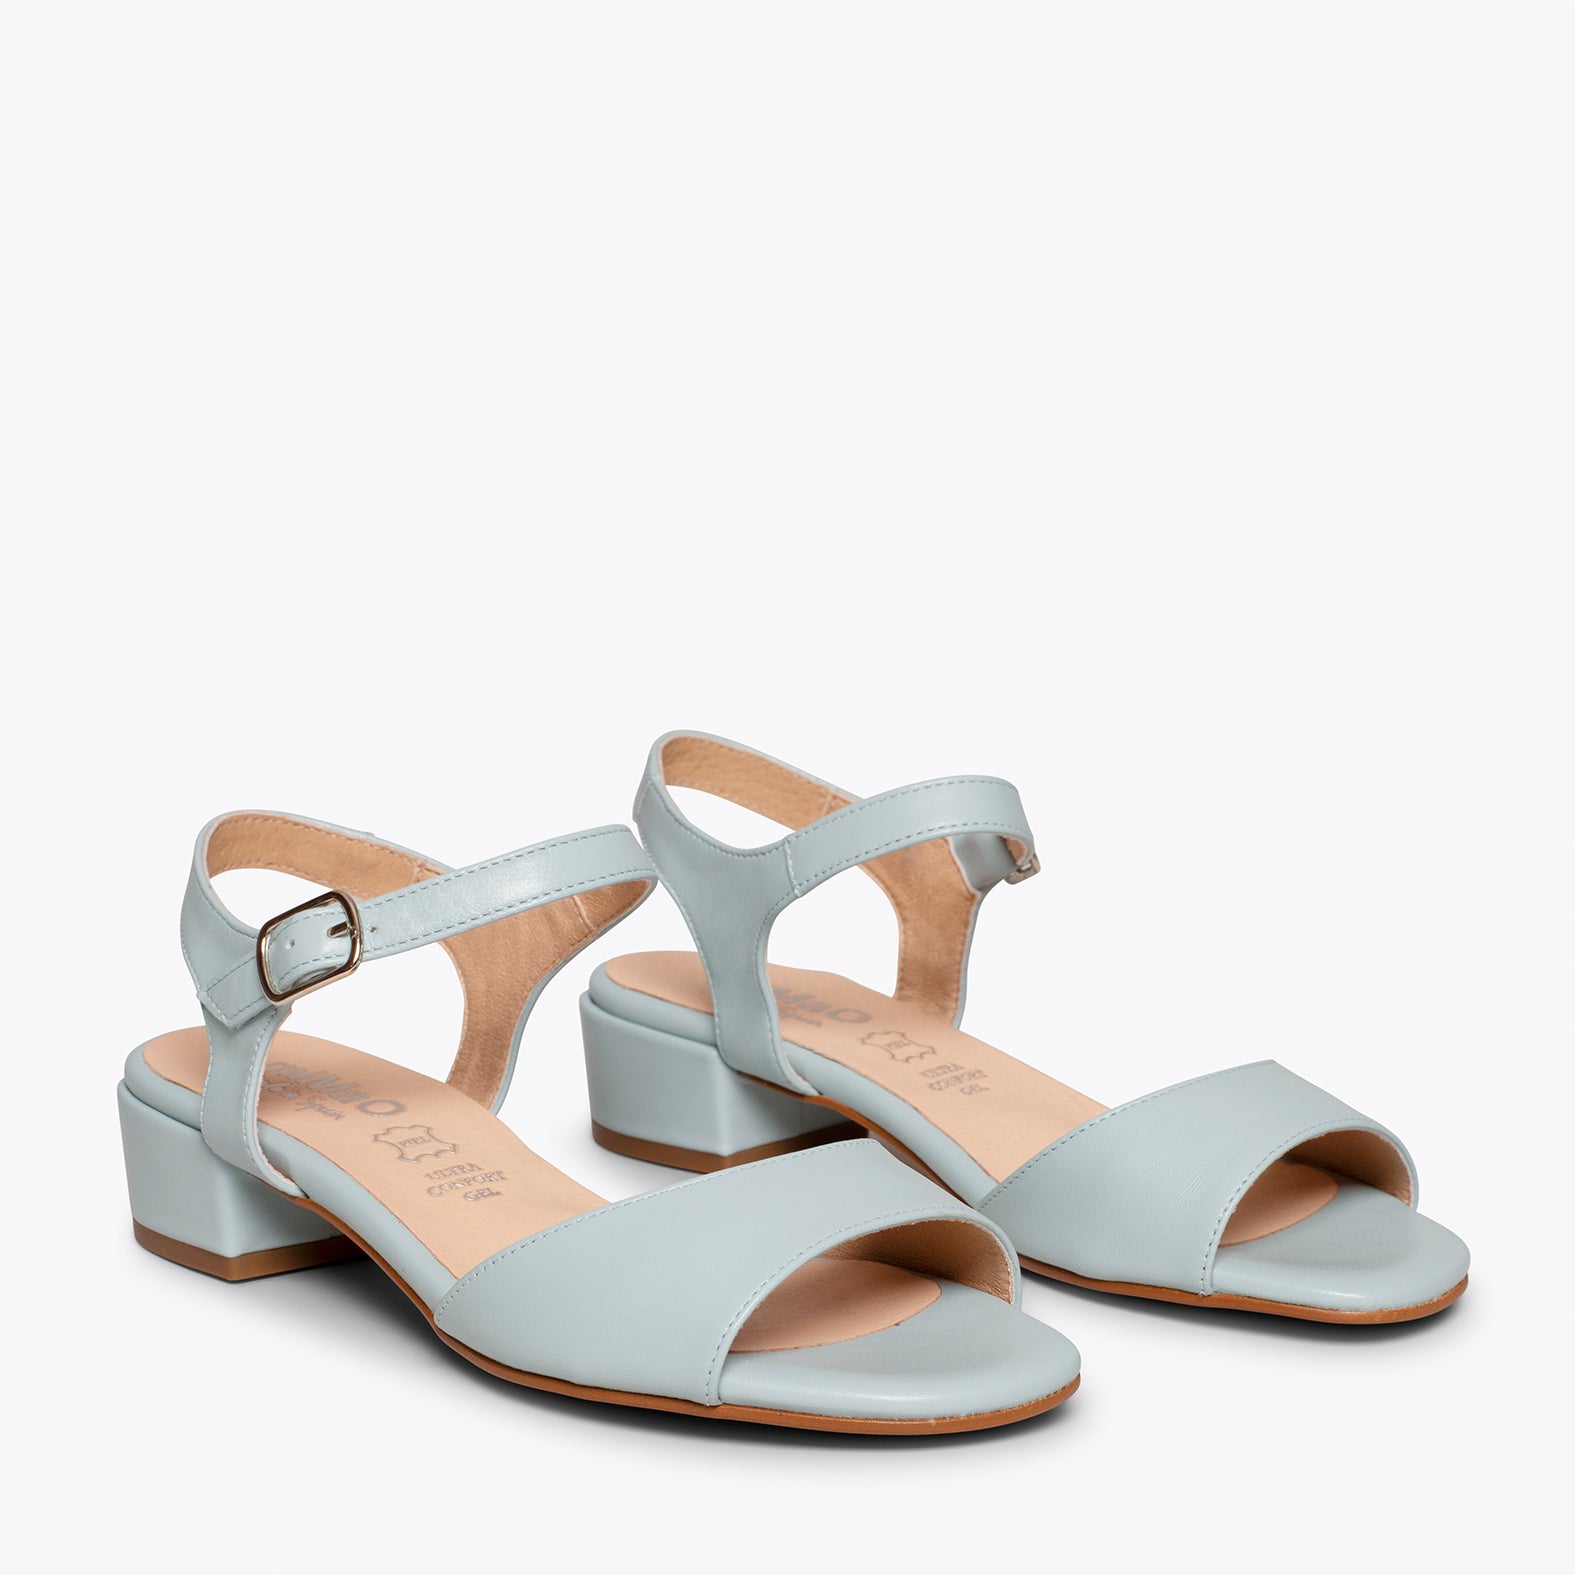 SEA – LIGHT BLUE low heel sandal